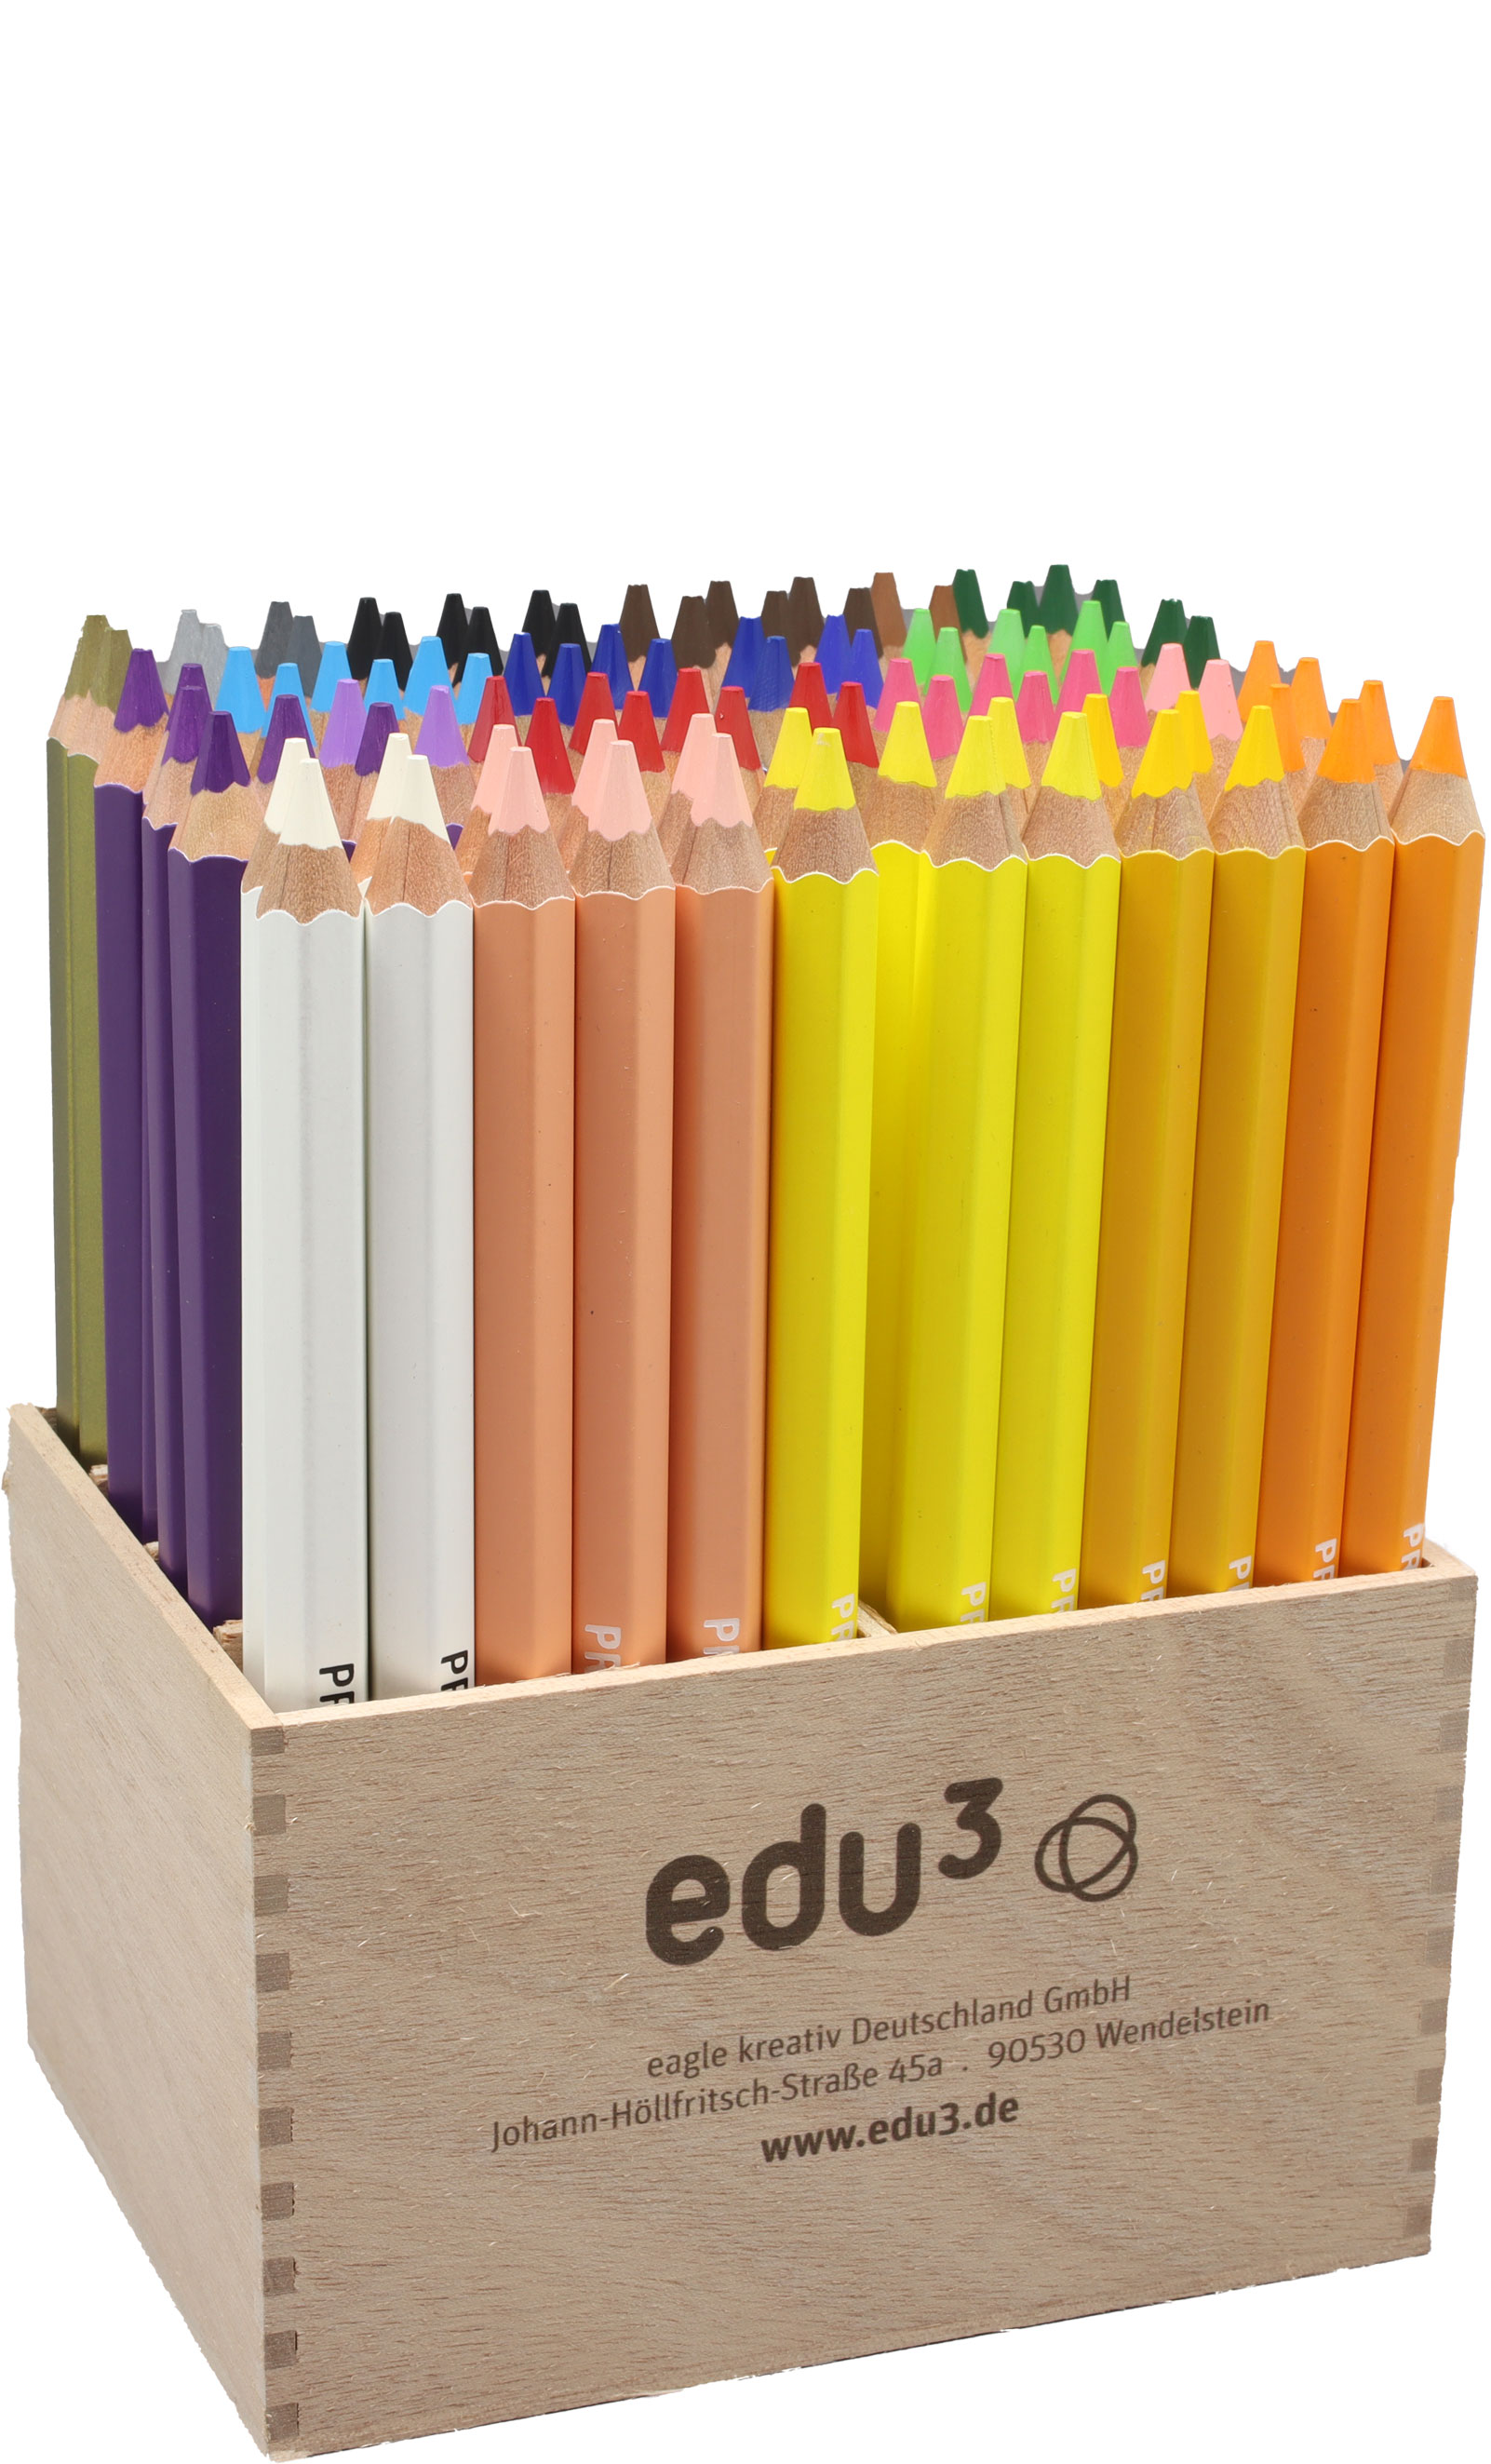 edu³ PRIME Jumbo colored pencils hex wooden display